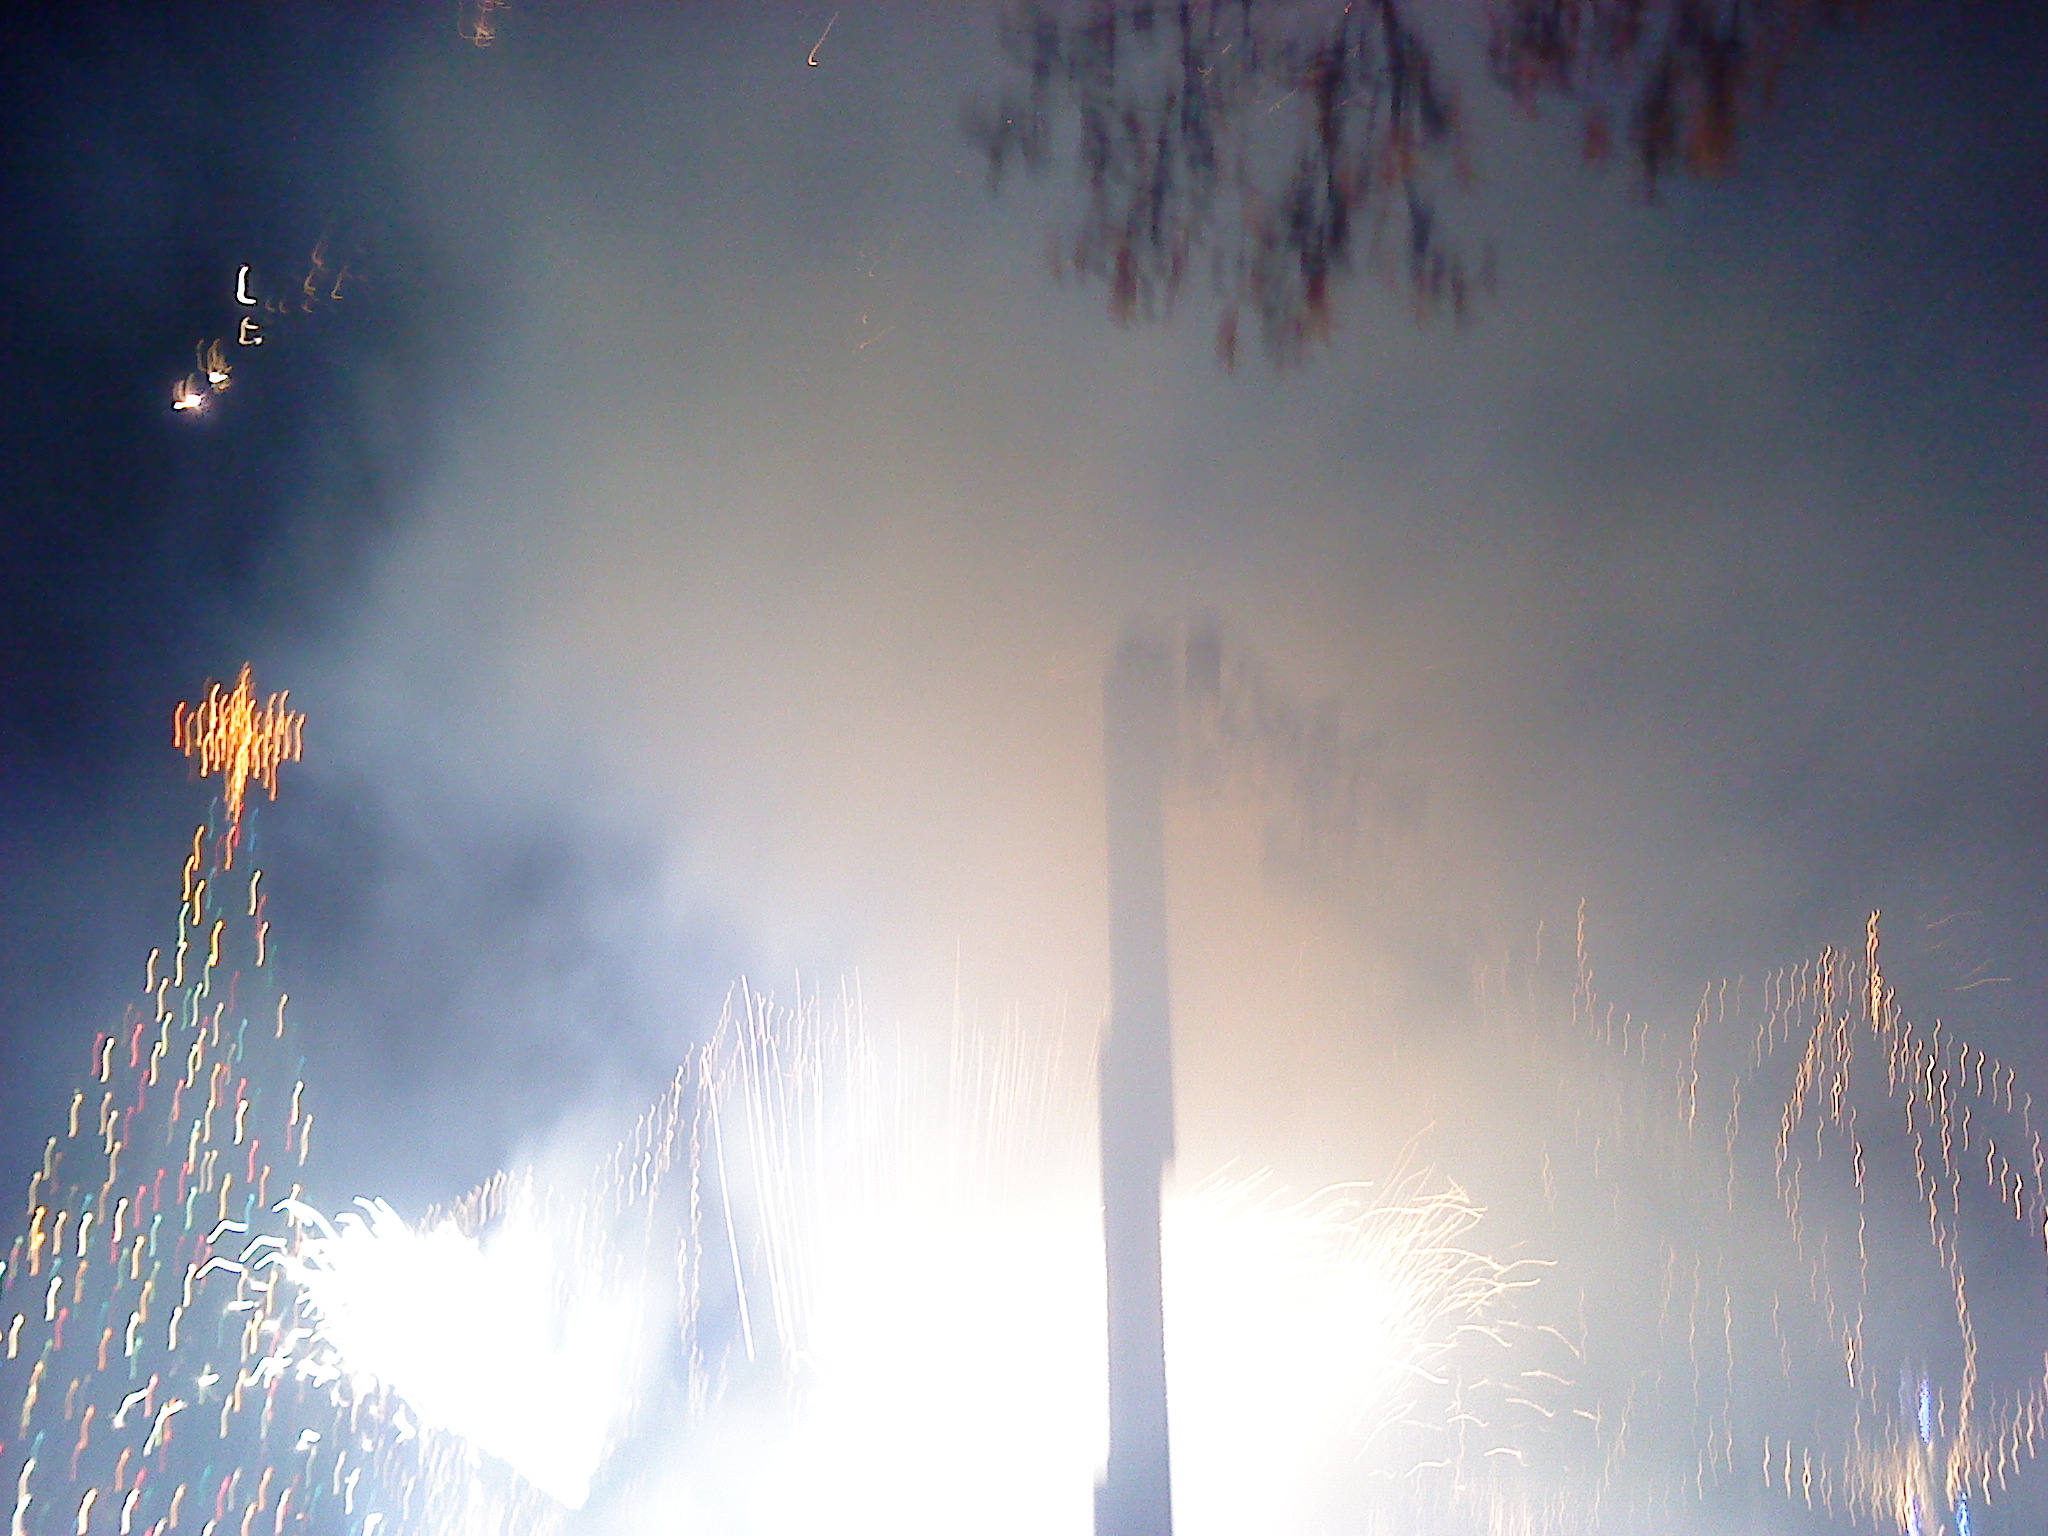 61. Fireworks